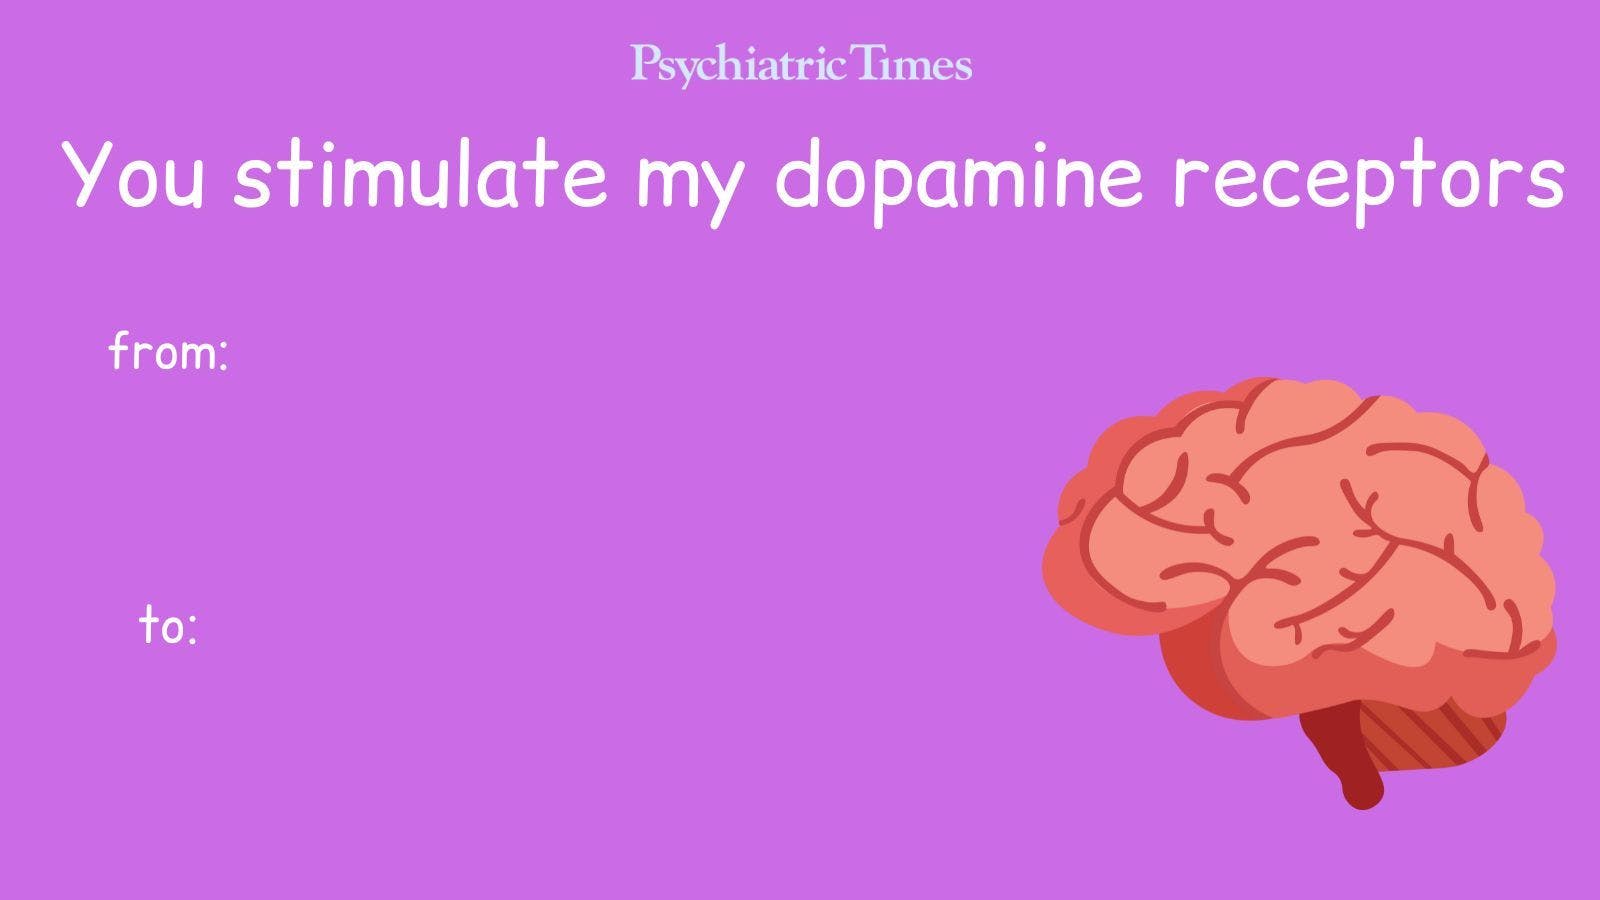 You stimulate my dopamine receptors